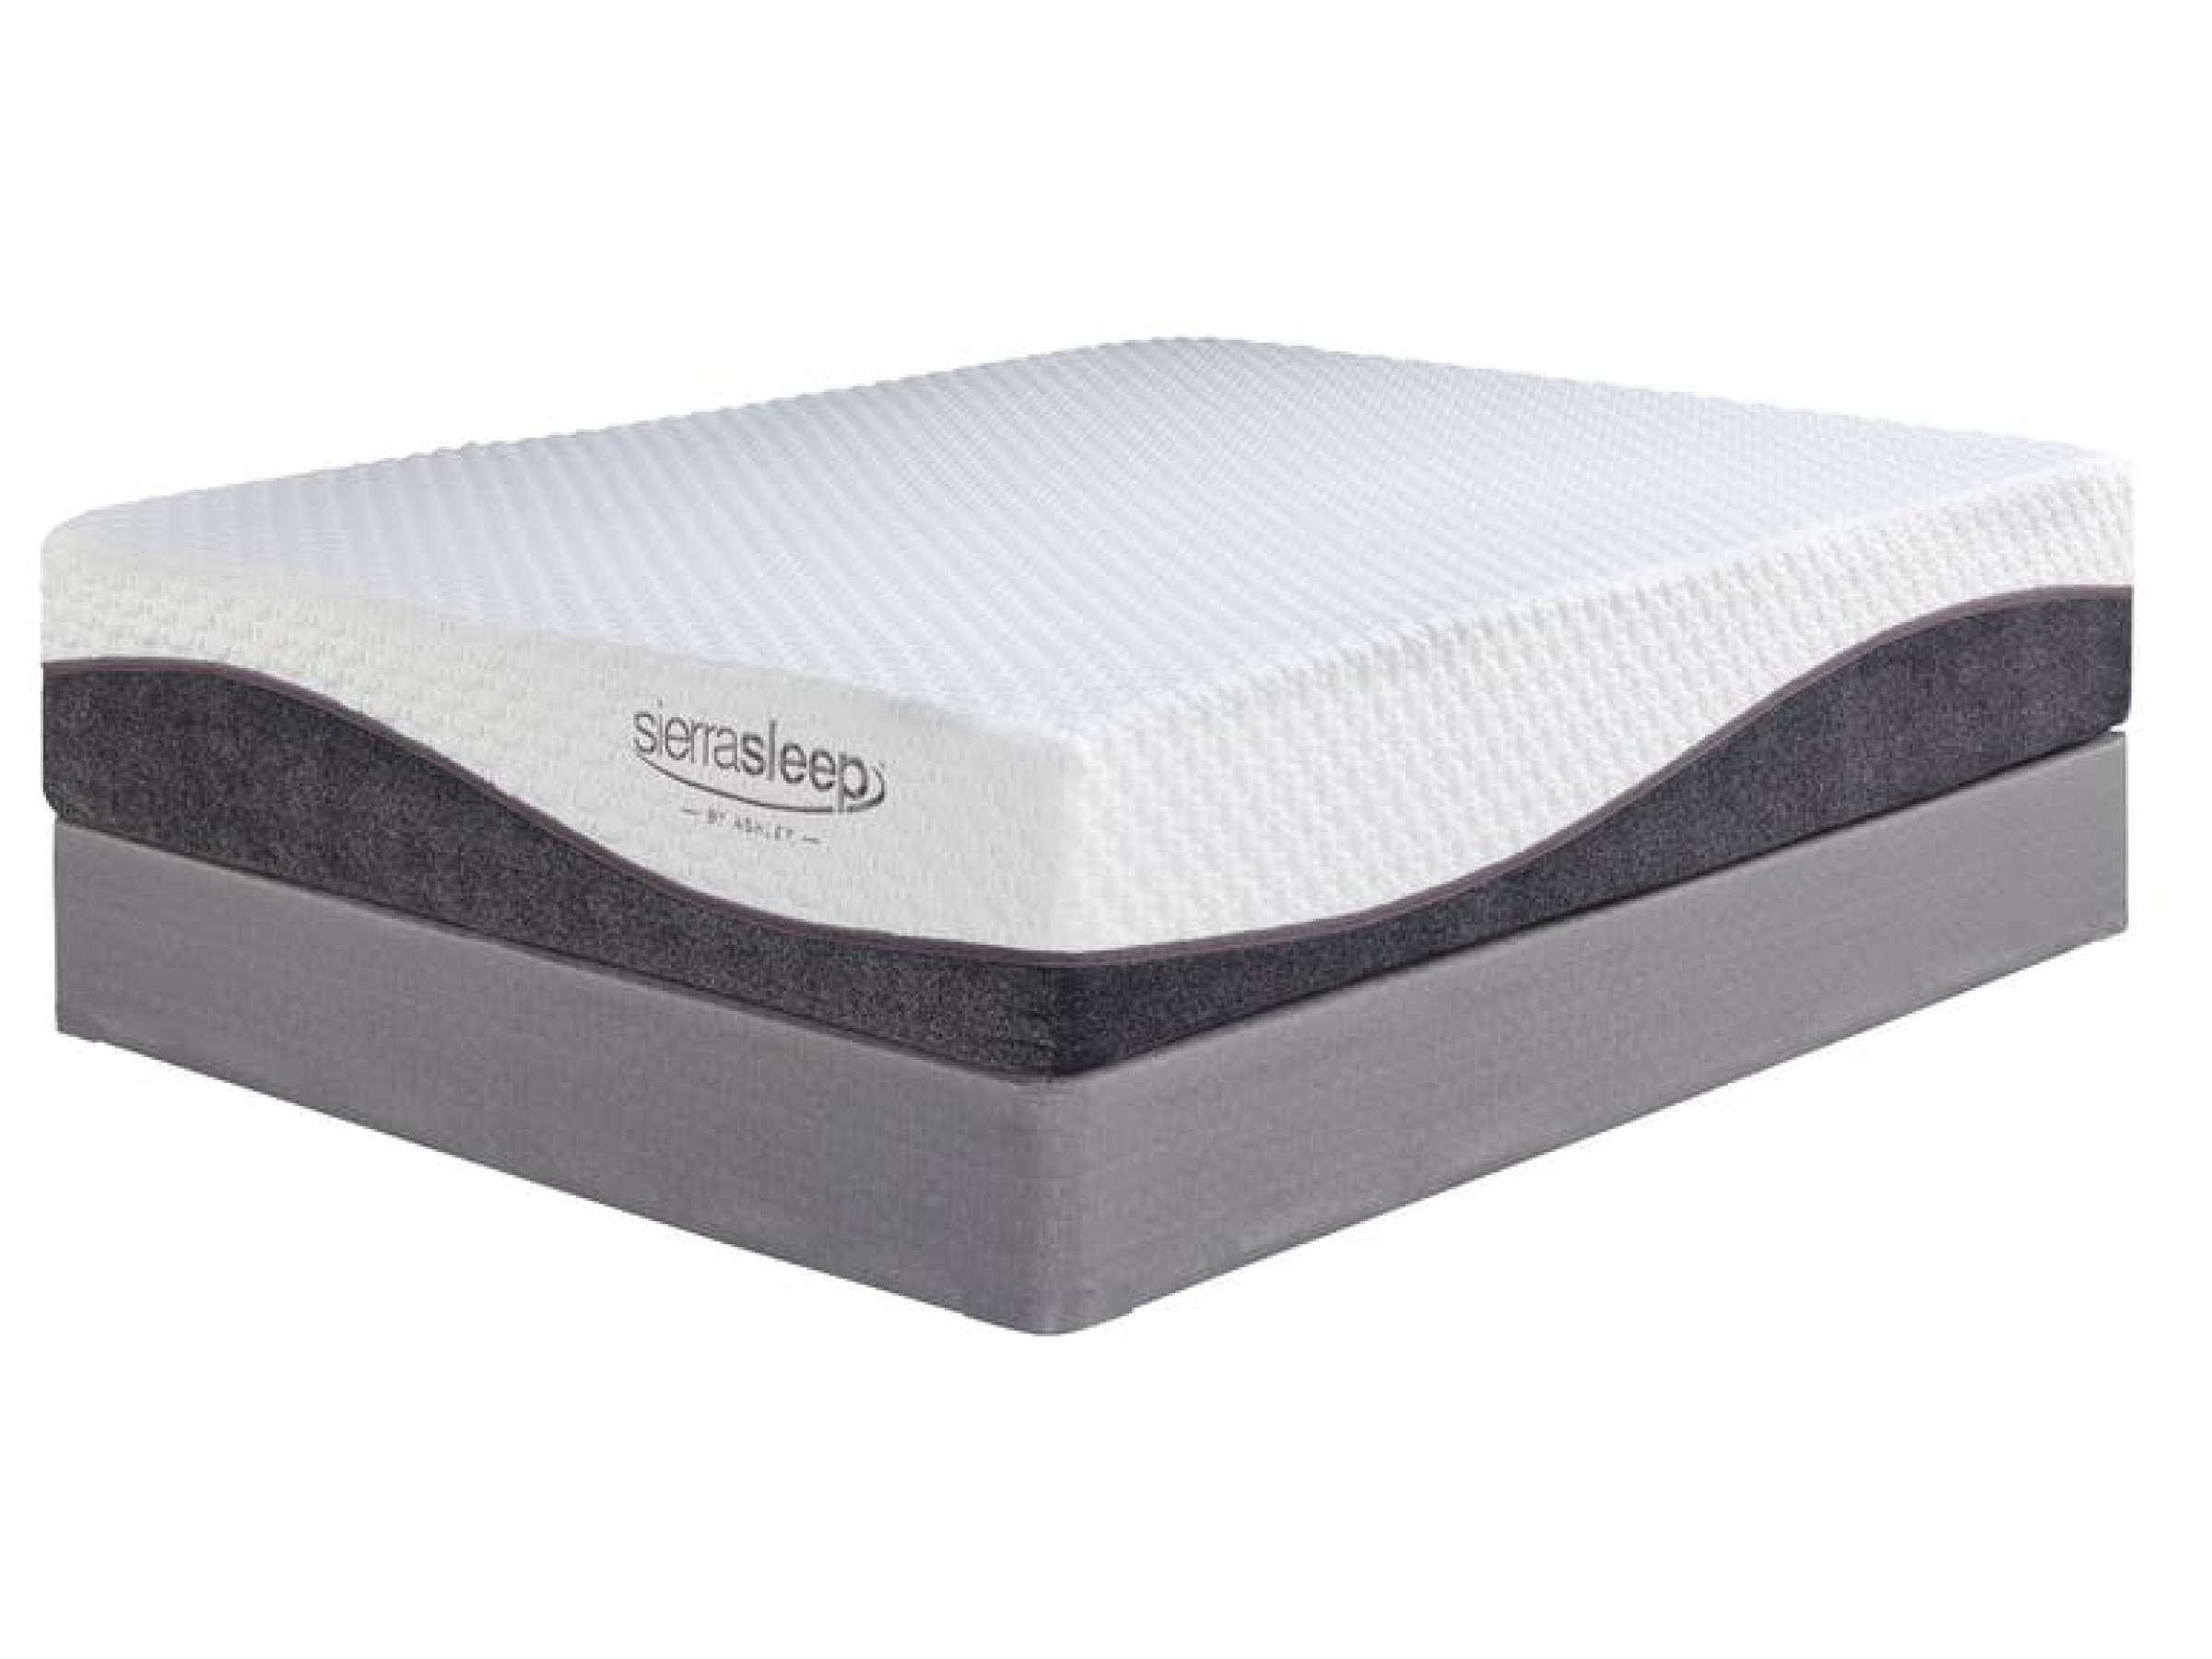 mygel hybrid mattress reviews